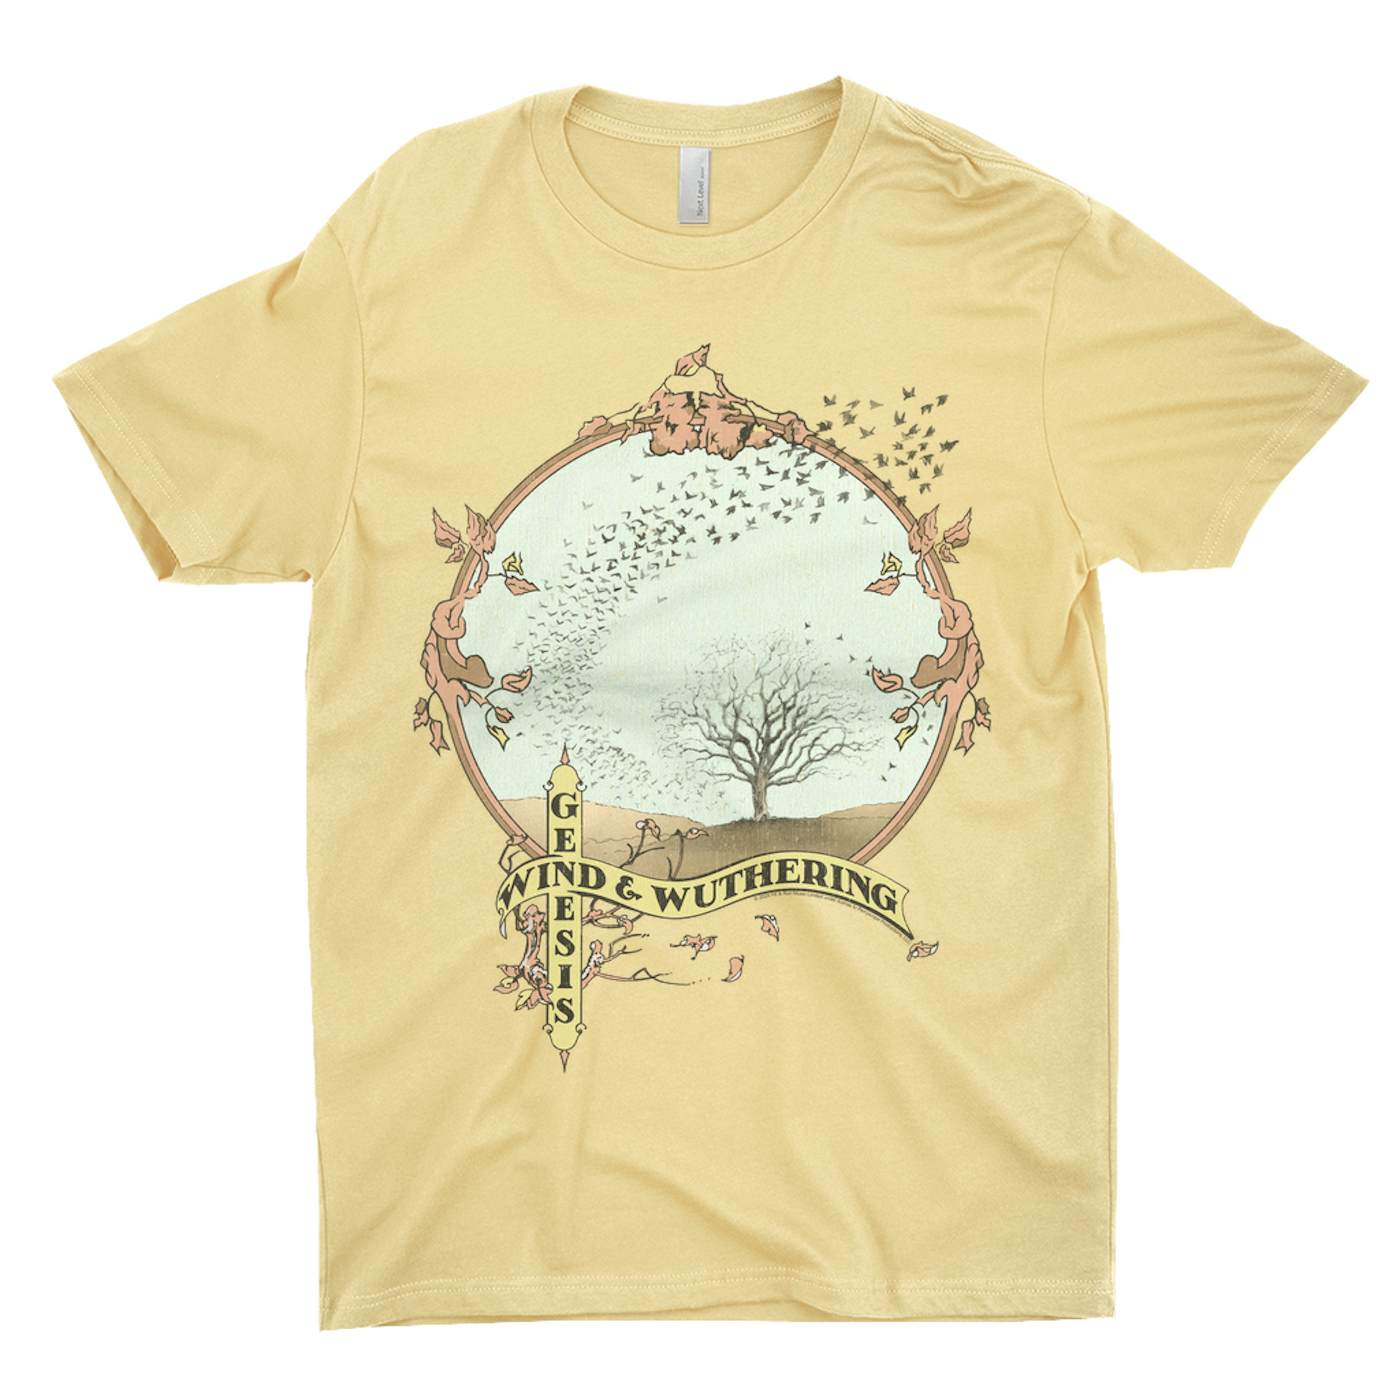 Genesis T-Shirt | Wind & Wuthering Retro Design Genesis Shirt